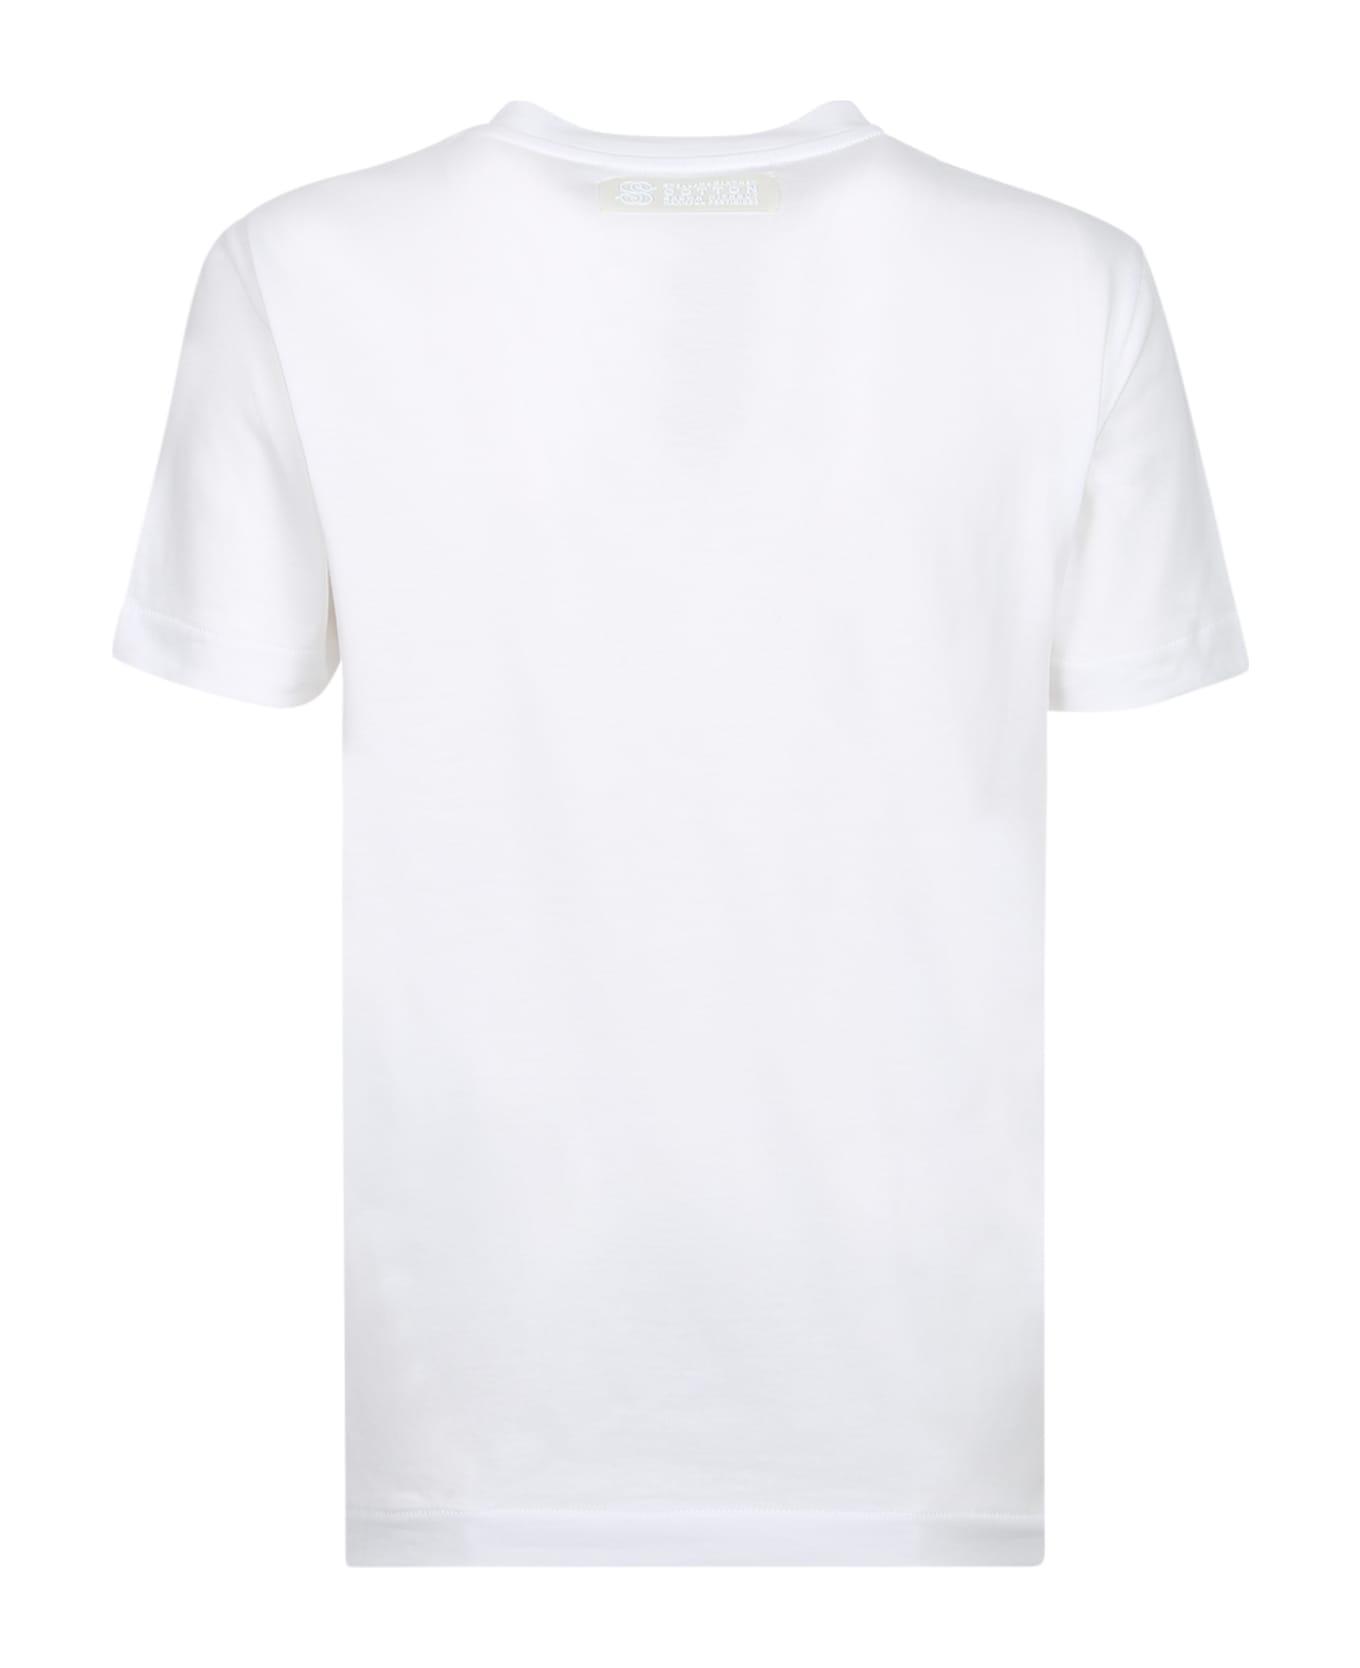 Stella McCartney Logo-print T-shirt - White